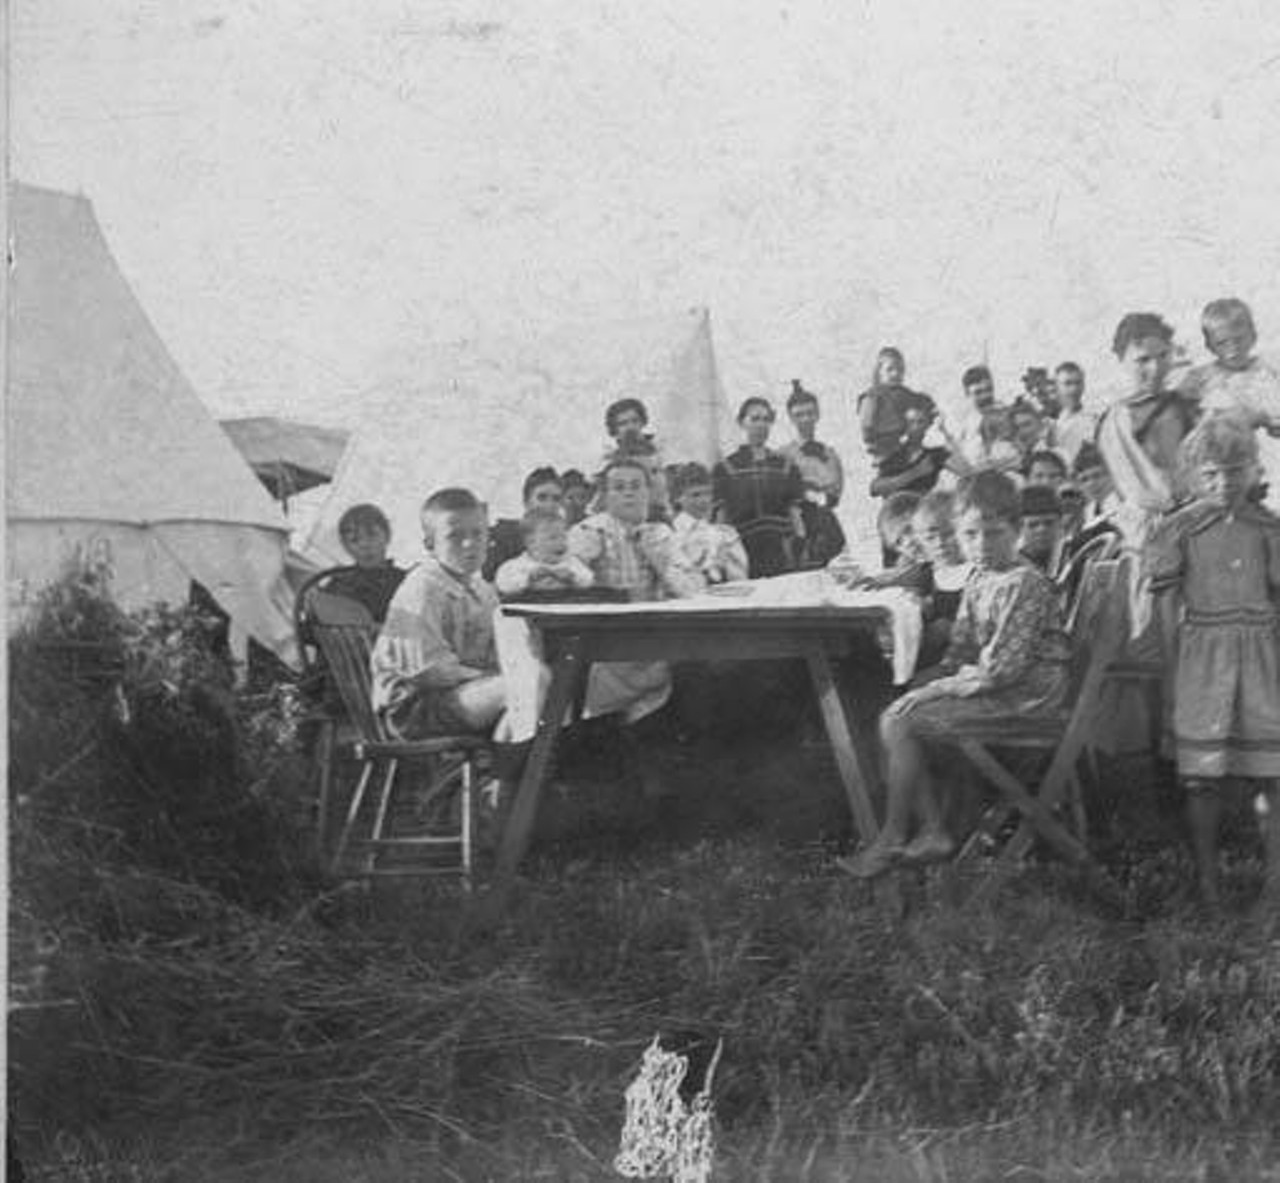 Camp Fairmount picnic (Cleveland Heights, Ohio), c. 1900